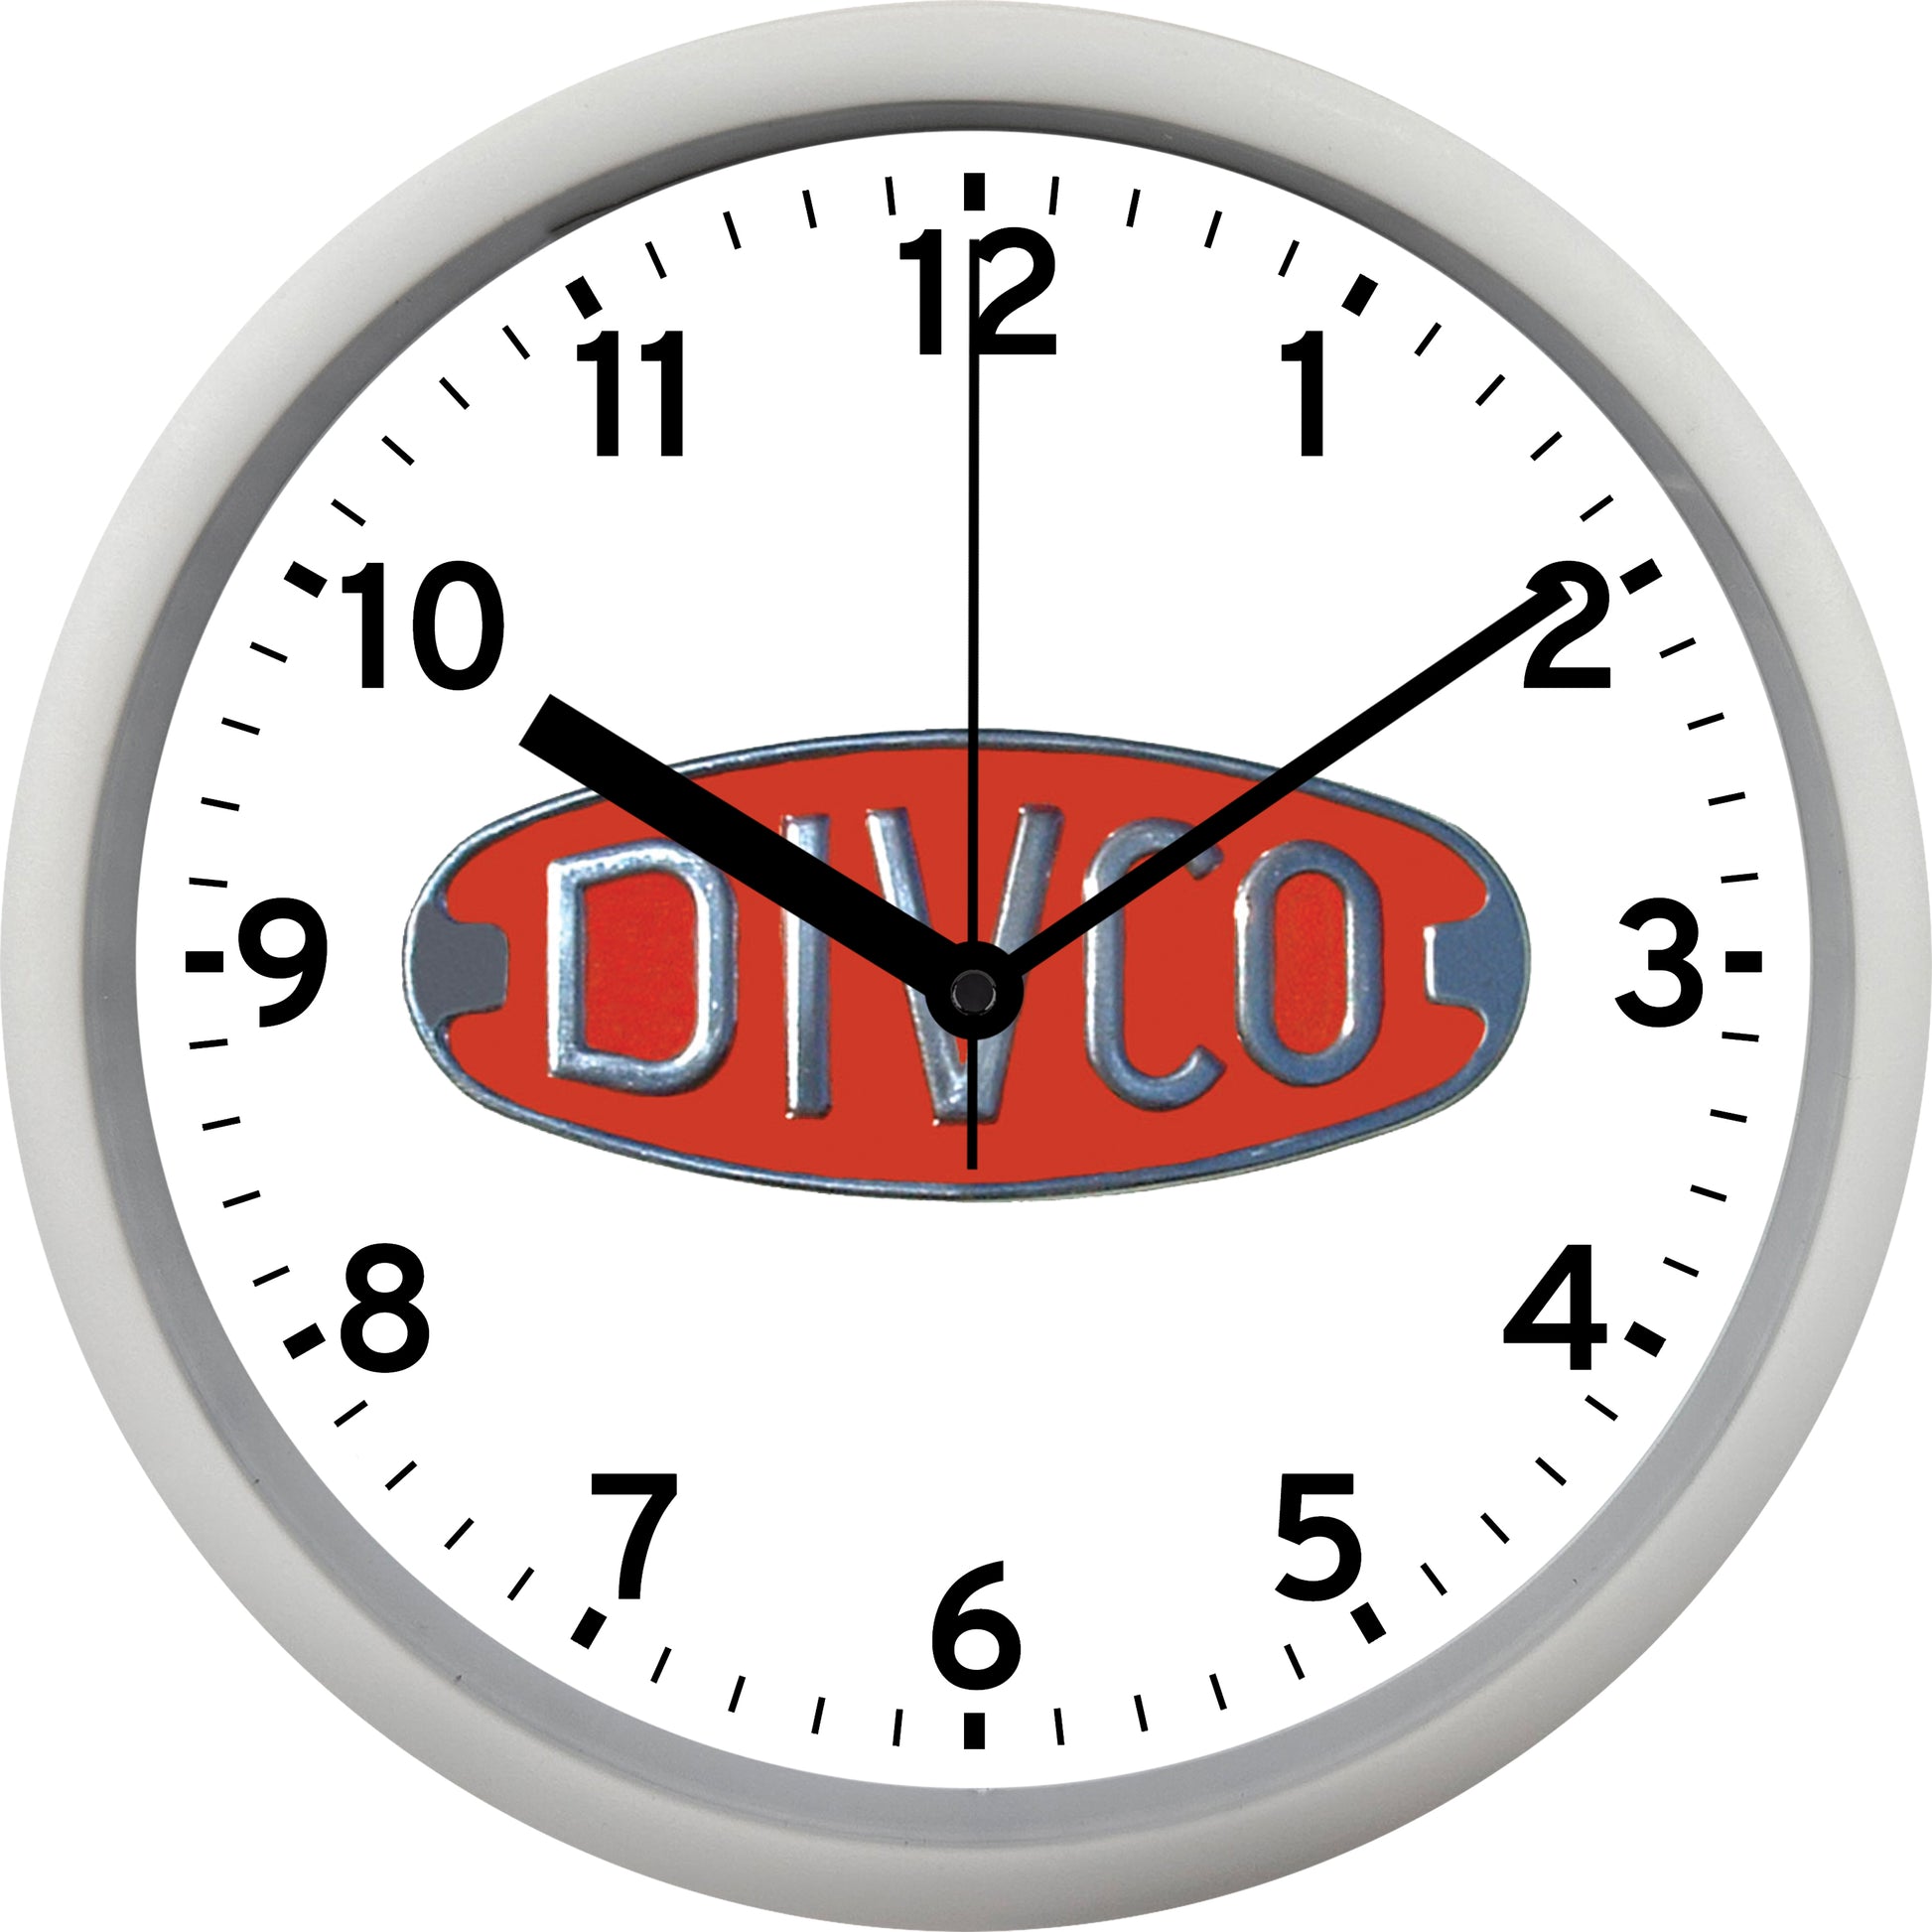 DIVCO Wall Clock